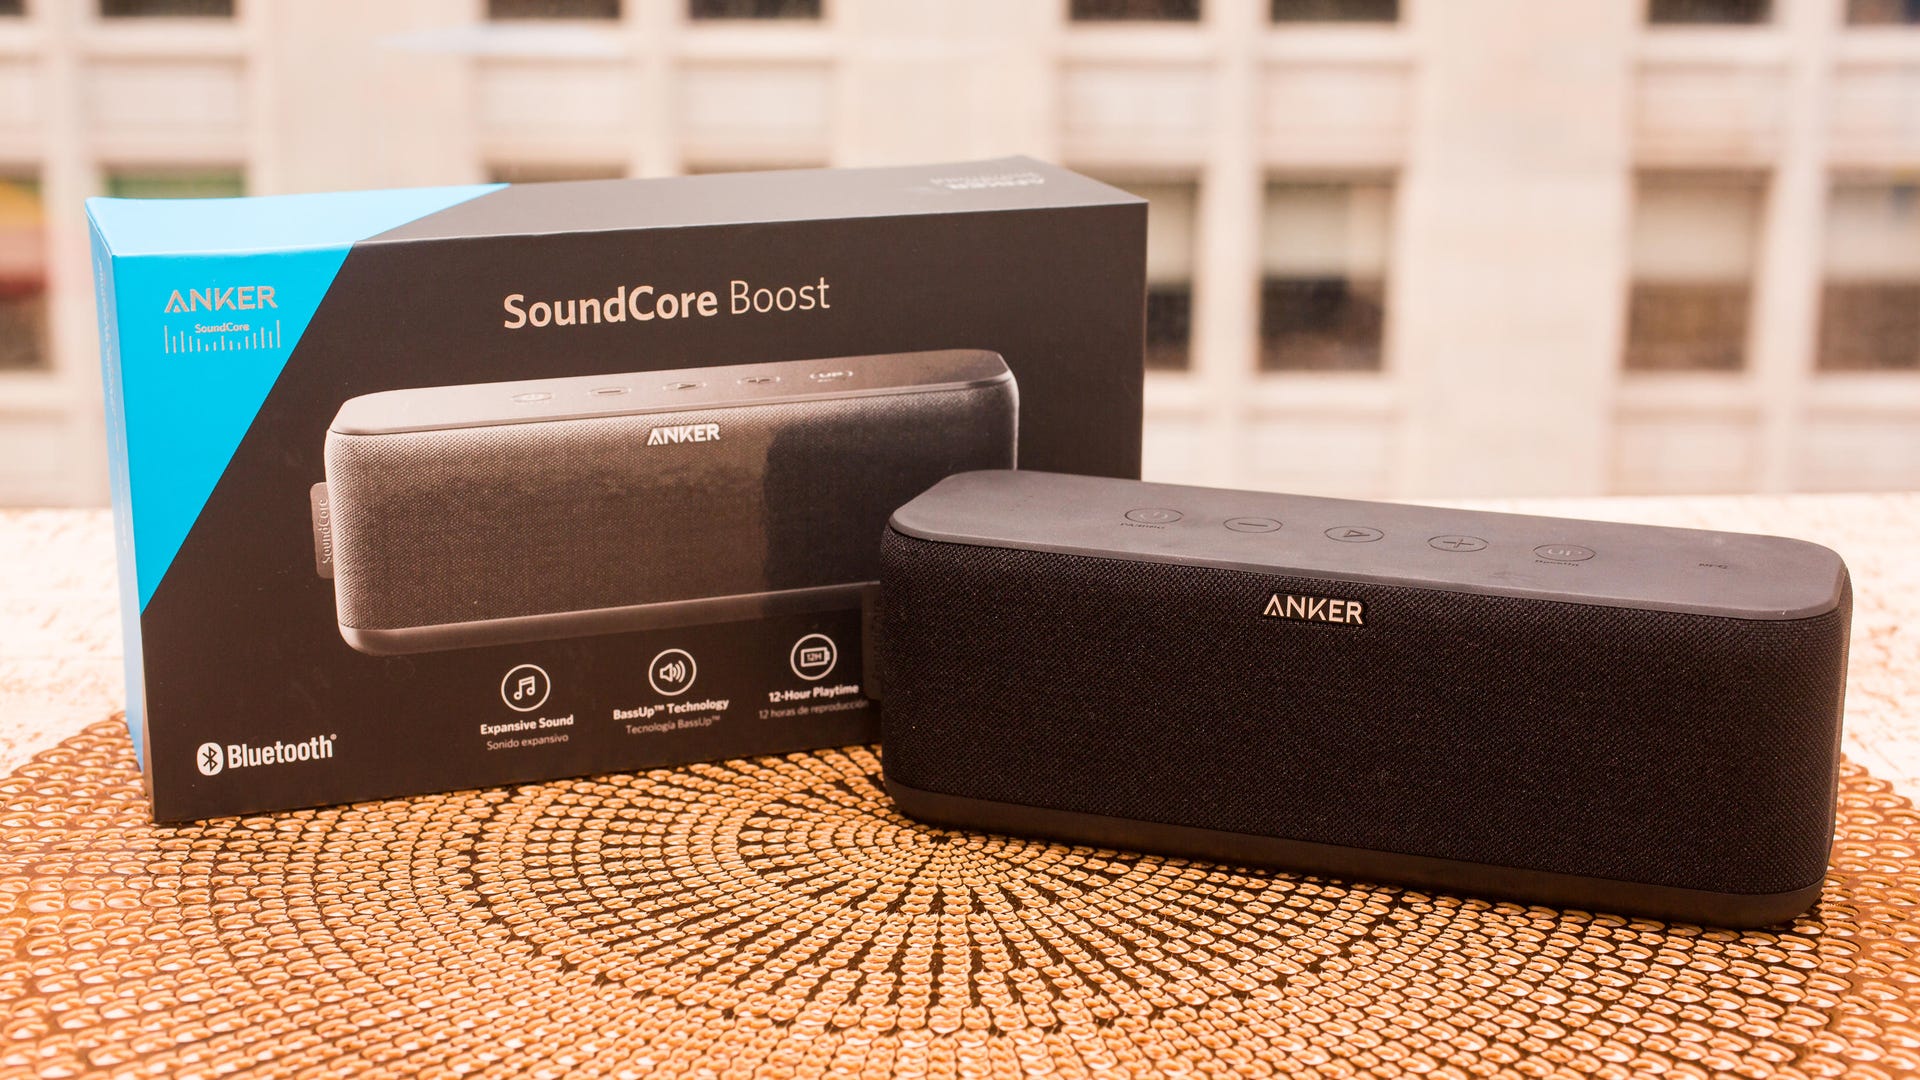 Injusto Demonio Comida sana Anker SoundCore Boost review: Anker SoundCore Boost speaker bumps the bass  - CNET